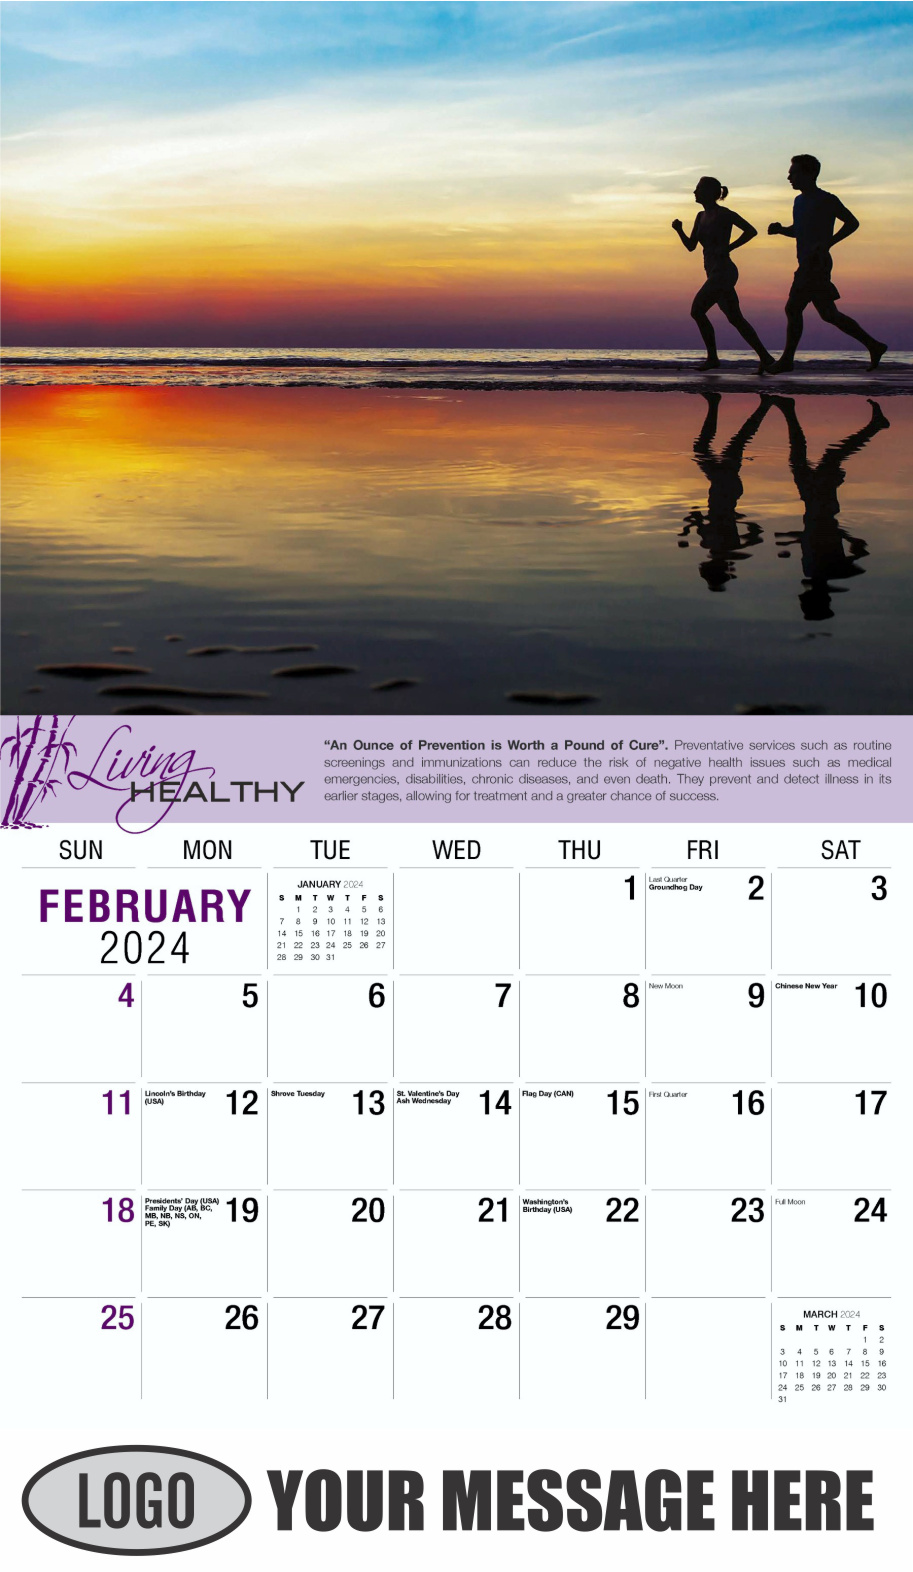 Living Healthy 2024 Business Promotional Calendar - February